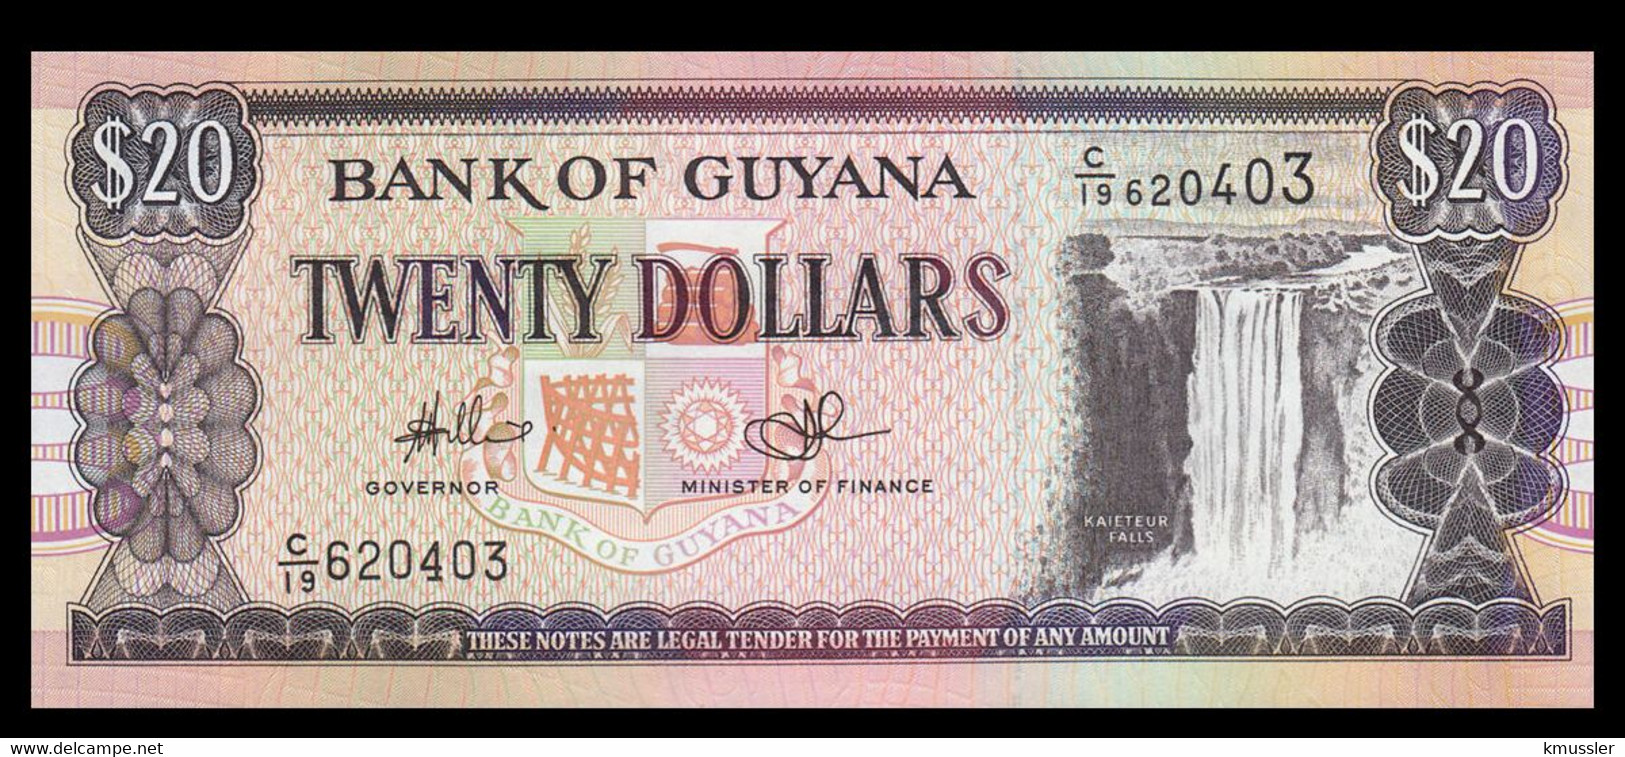 # # # Banknote Guyana 20 Dollars (1996) P.30 E UNC # # # - Guyana